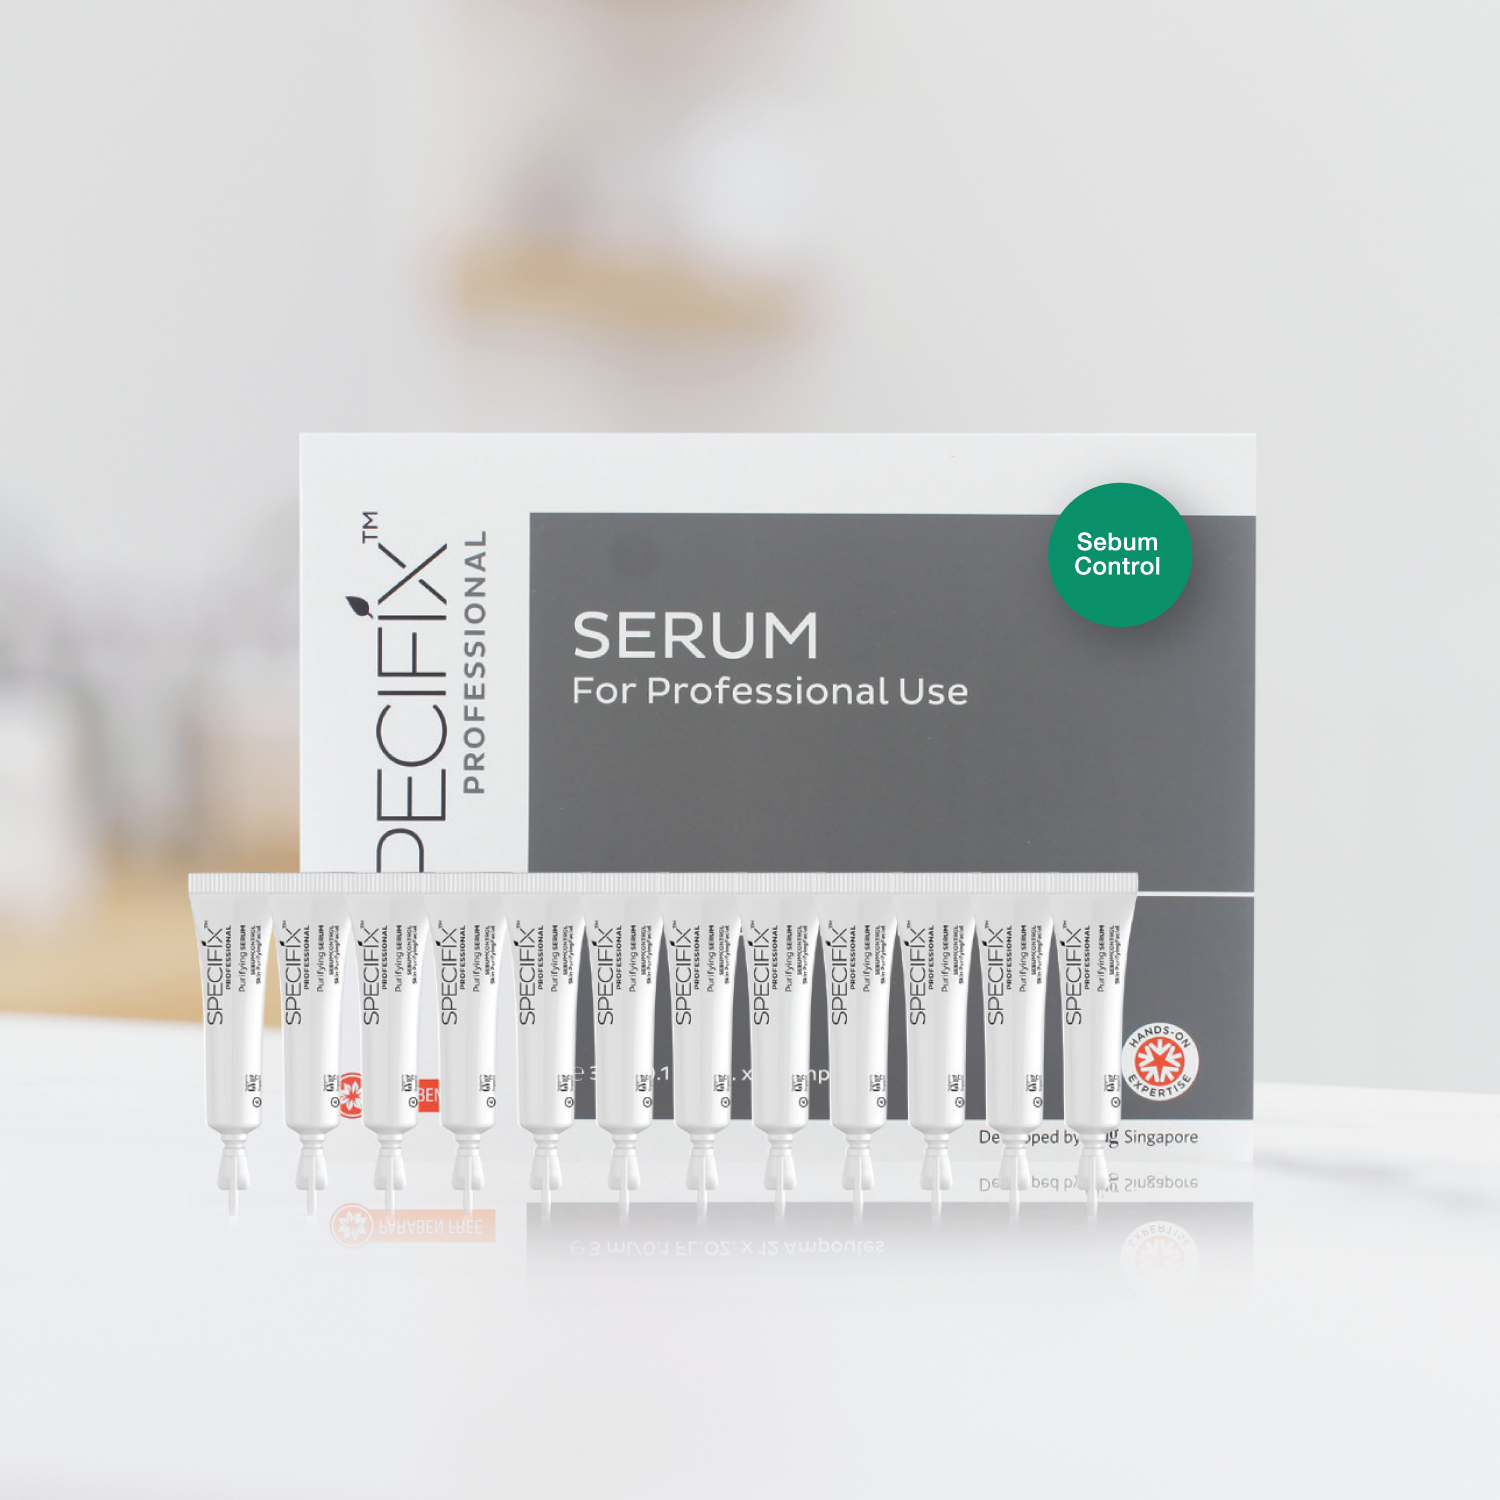 Crystal Clear Skin Clarity: SPECIFIX™ Sebumcontrol Purifying Serum